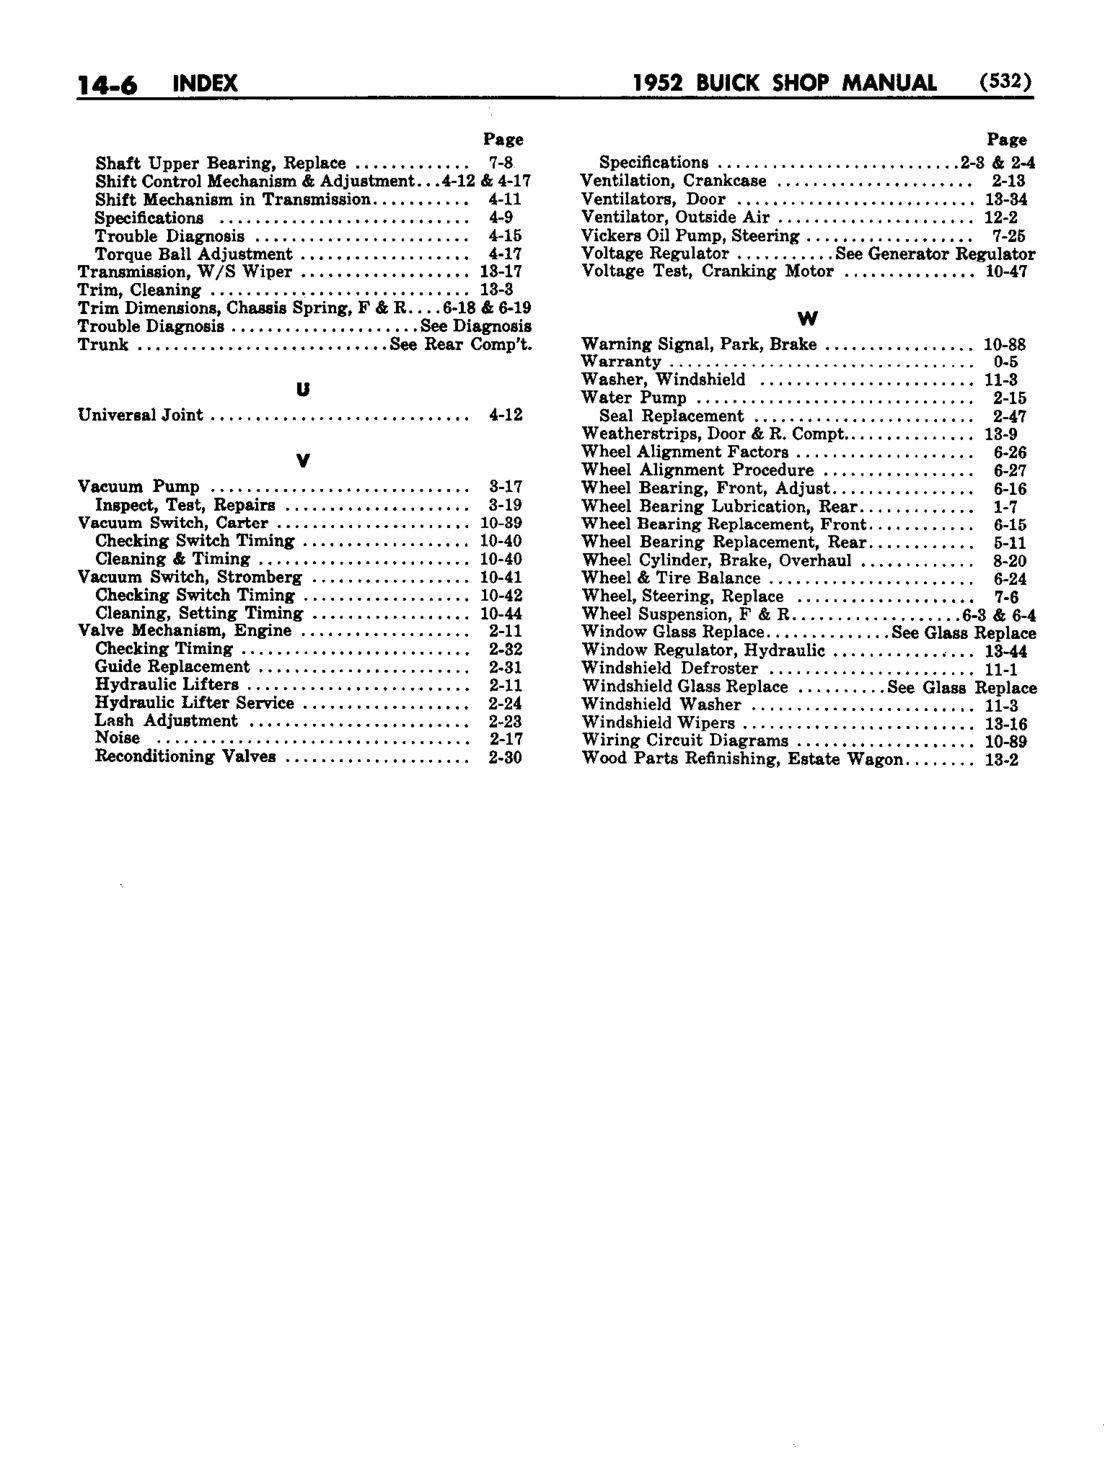 n_15 1952 Buick Shop Manual - Index-006-006.jpg